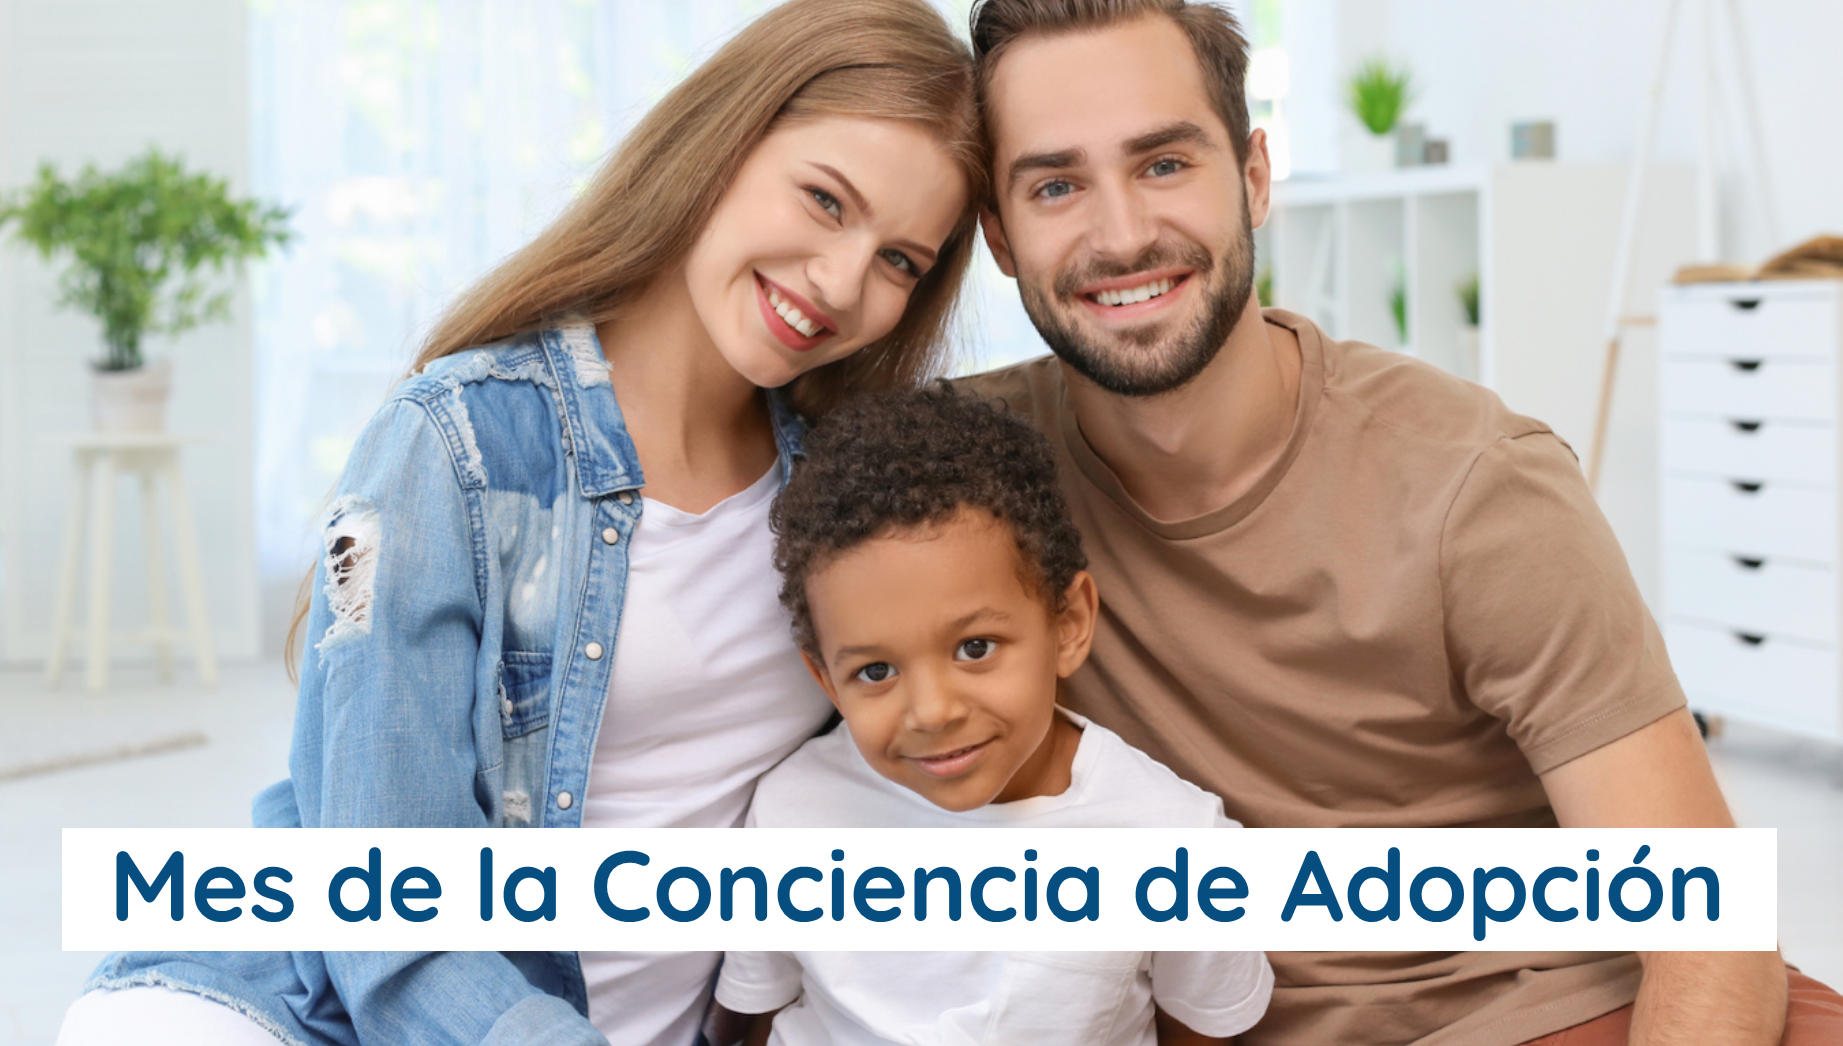 adoption_web_ad_2019_Spanish.png